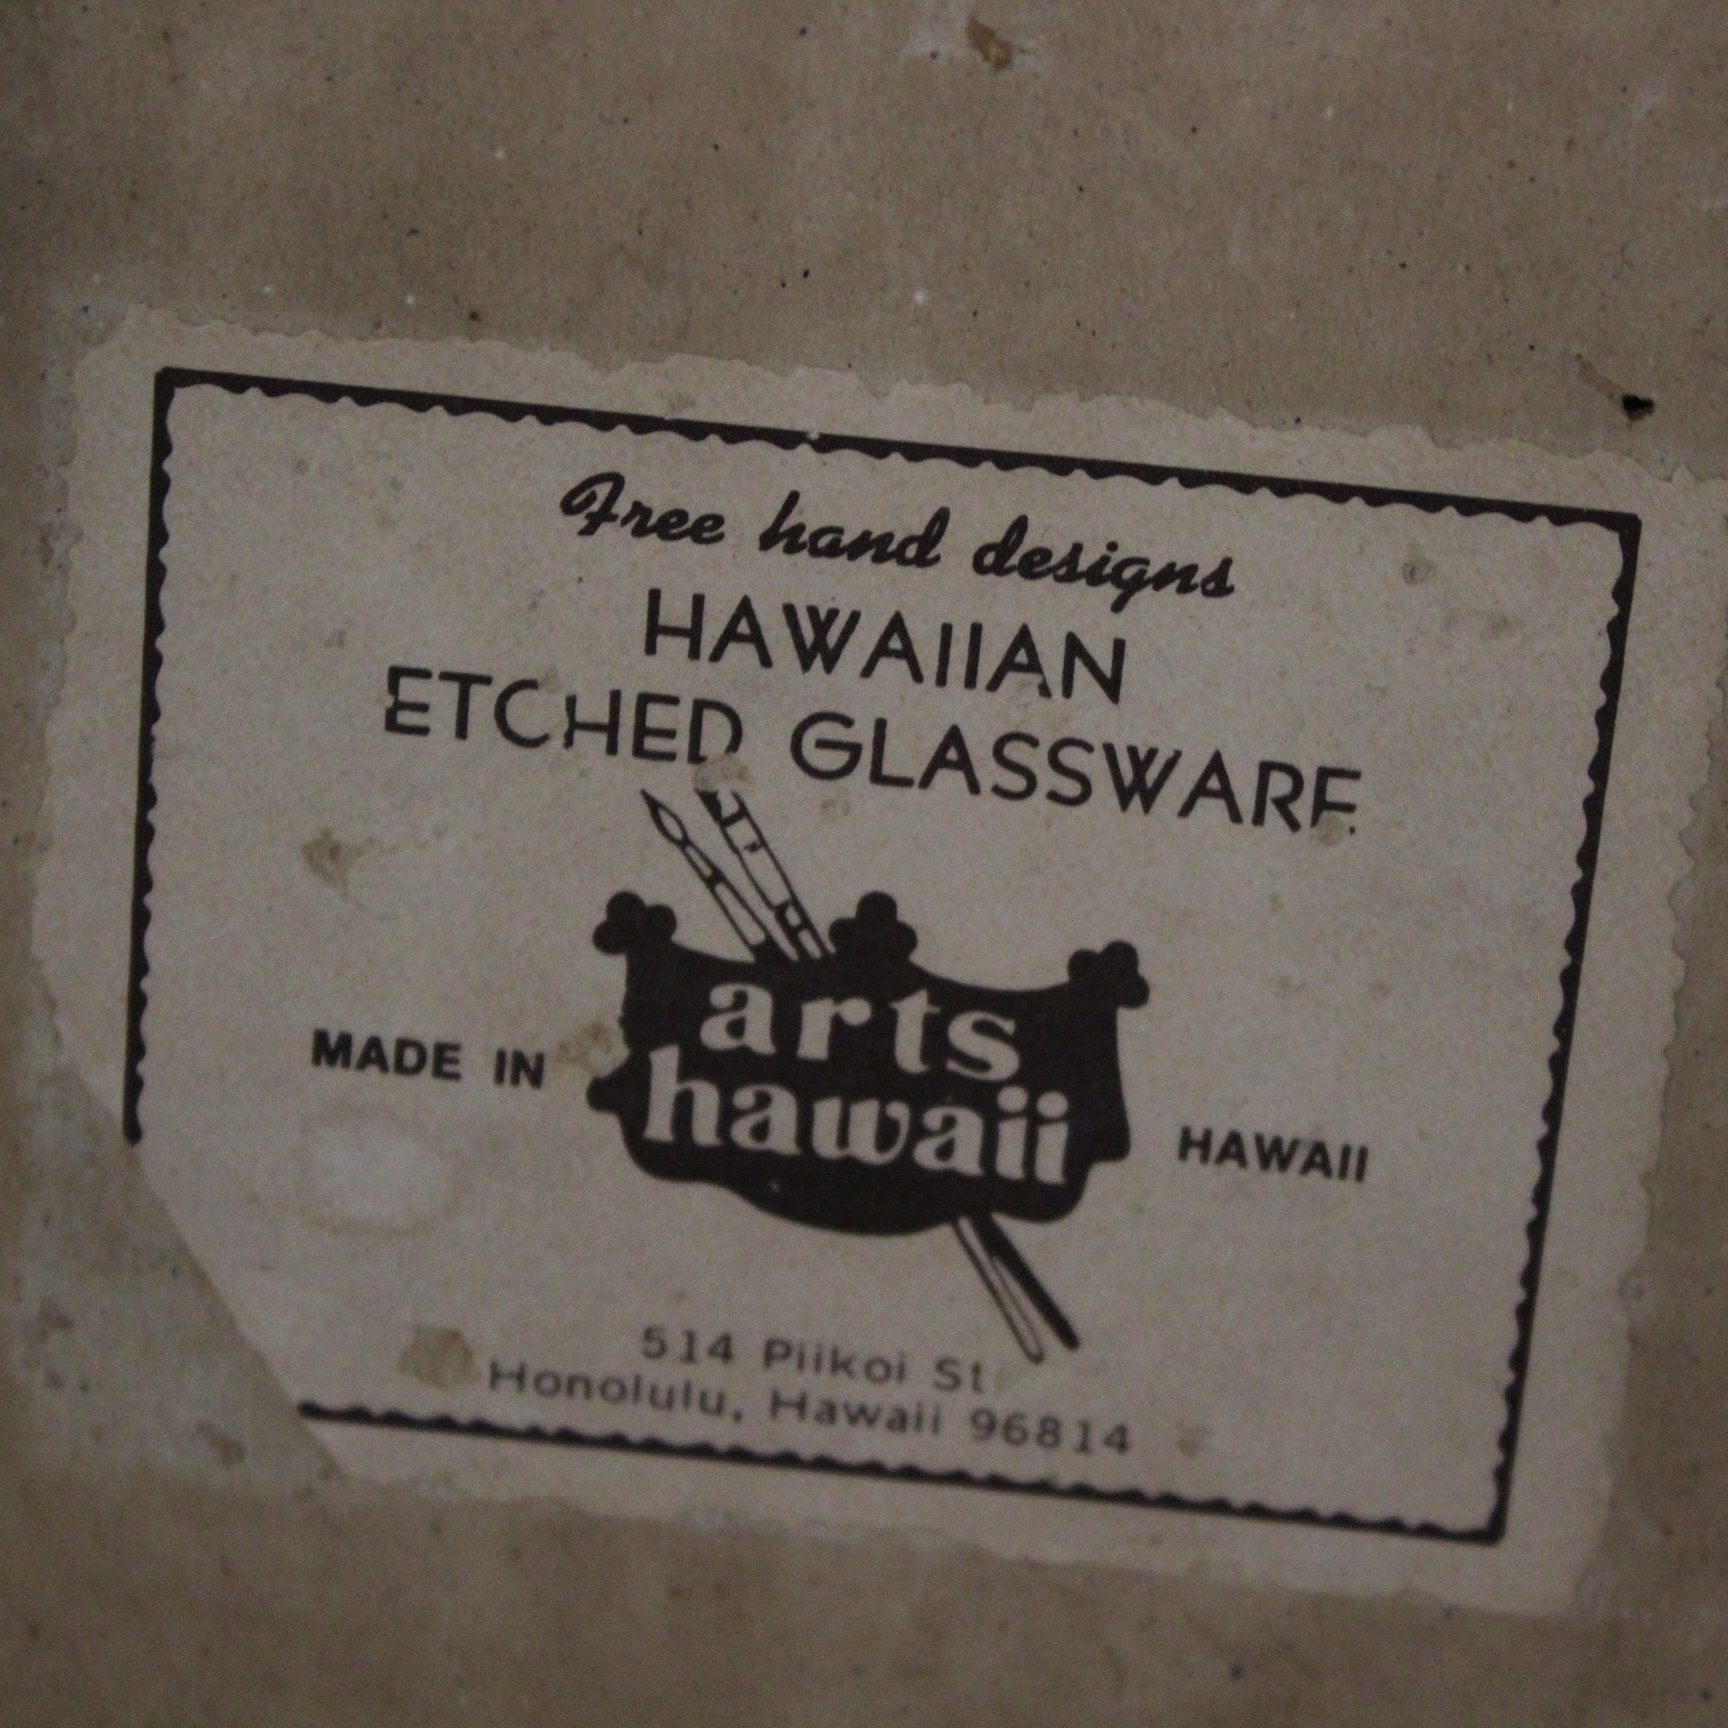 Frank Oda Arts Hawaii Pair Flutes Goblets Hibiscus Etched Wedding Gift 1980s closeup label hawaiian etched glass arts hawaii